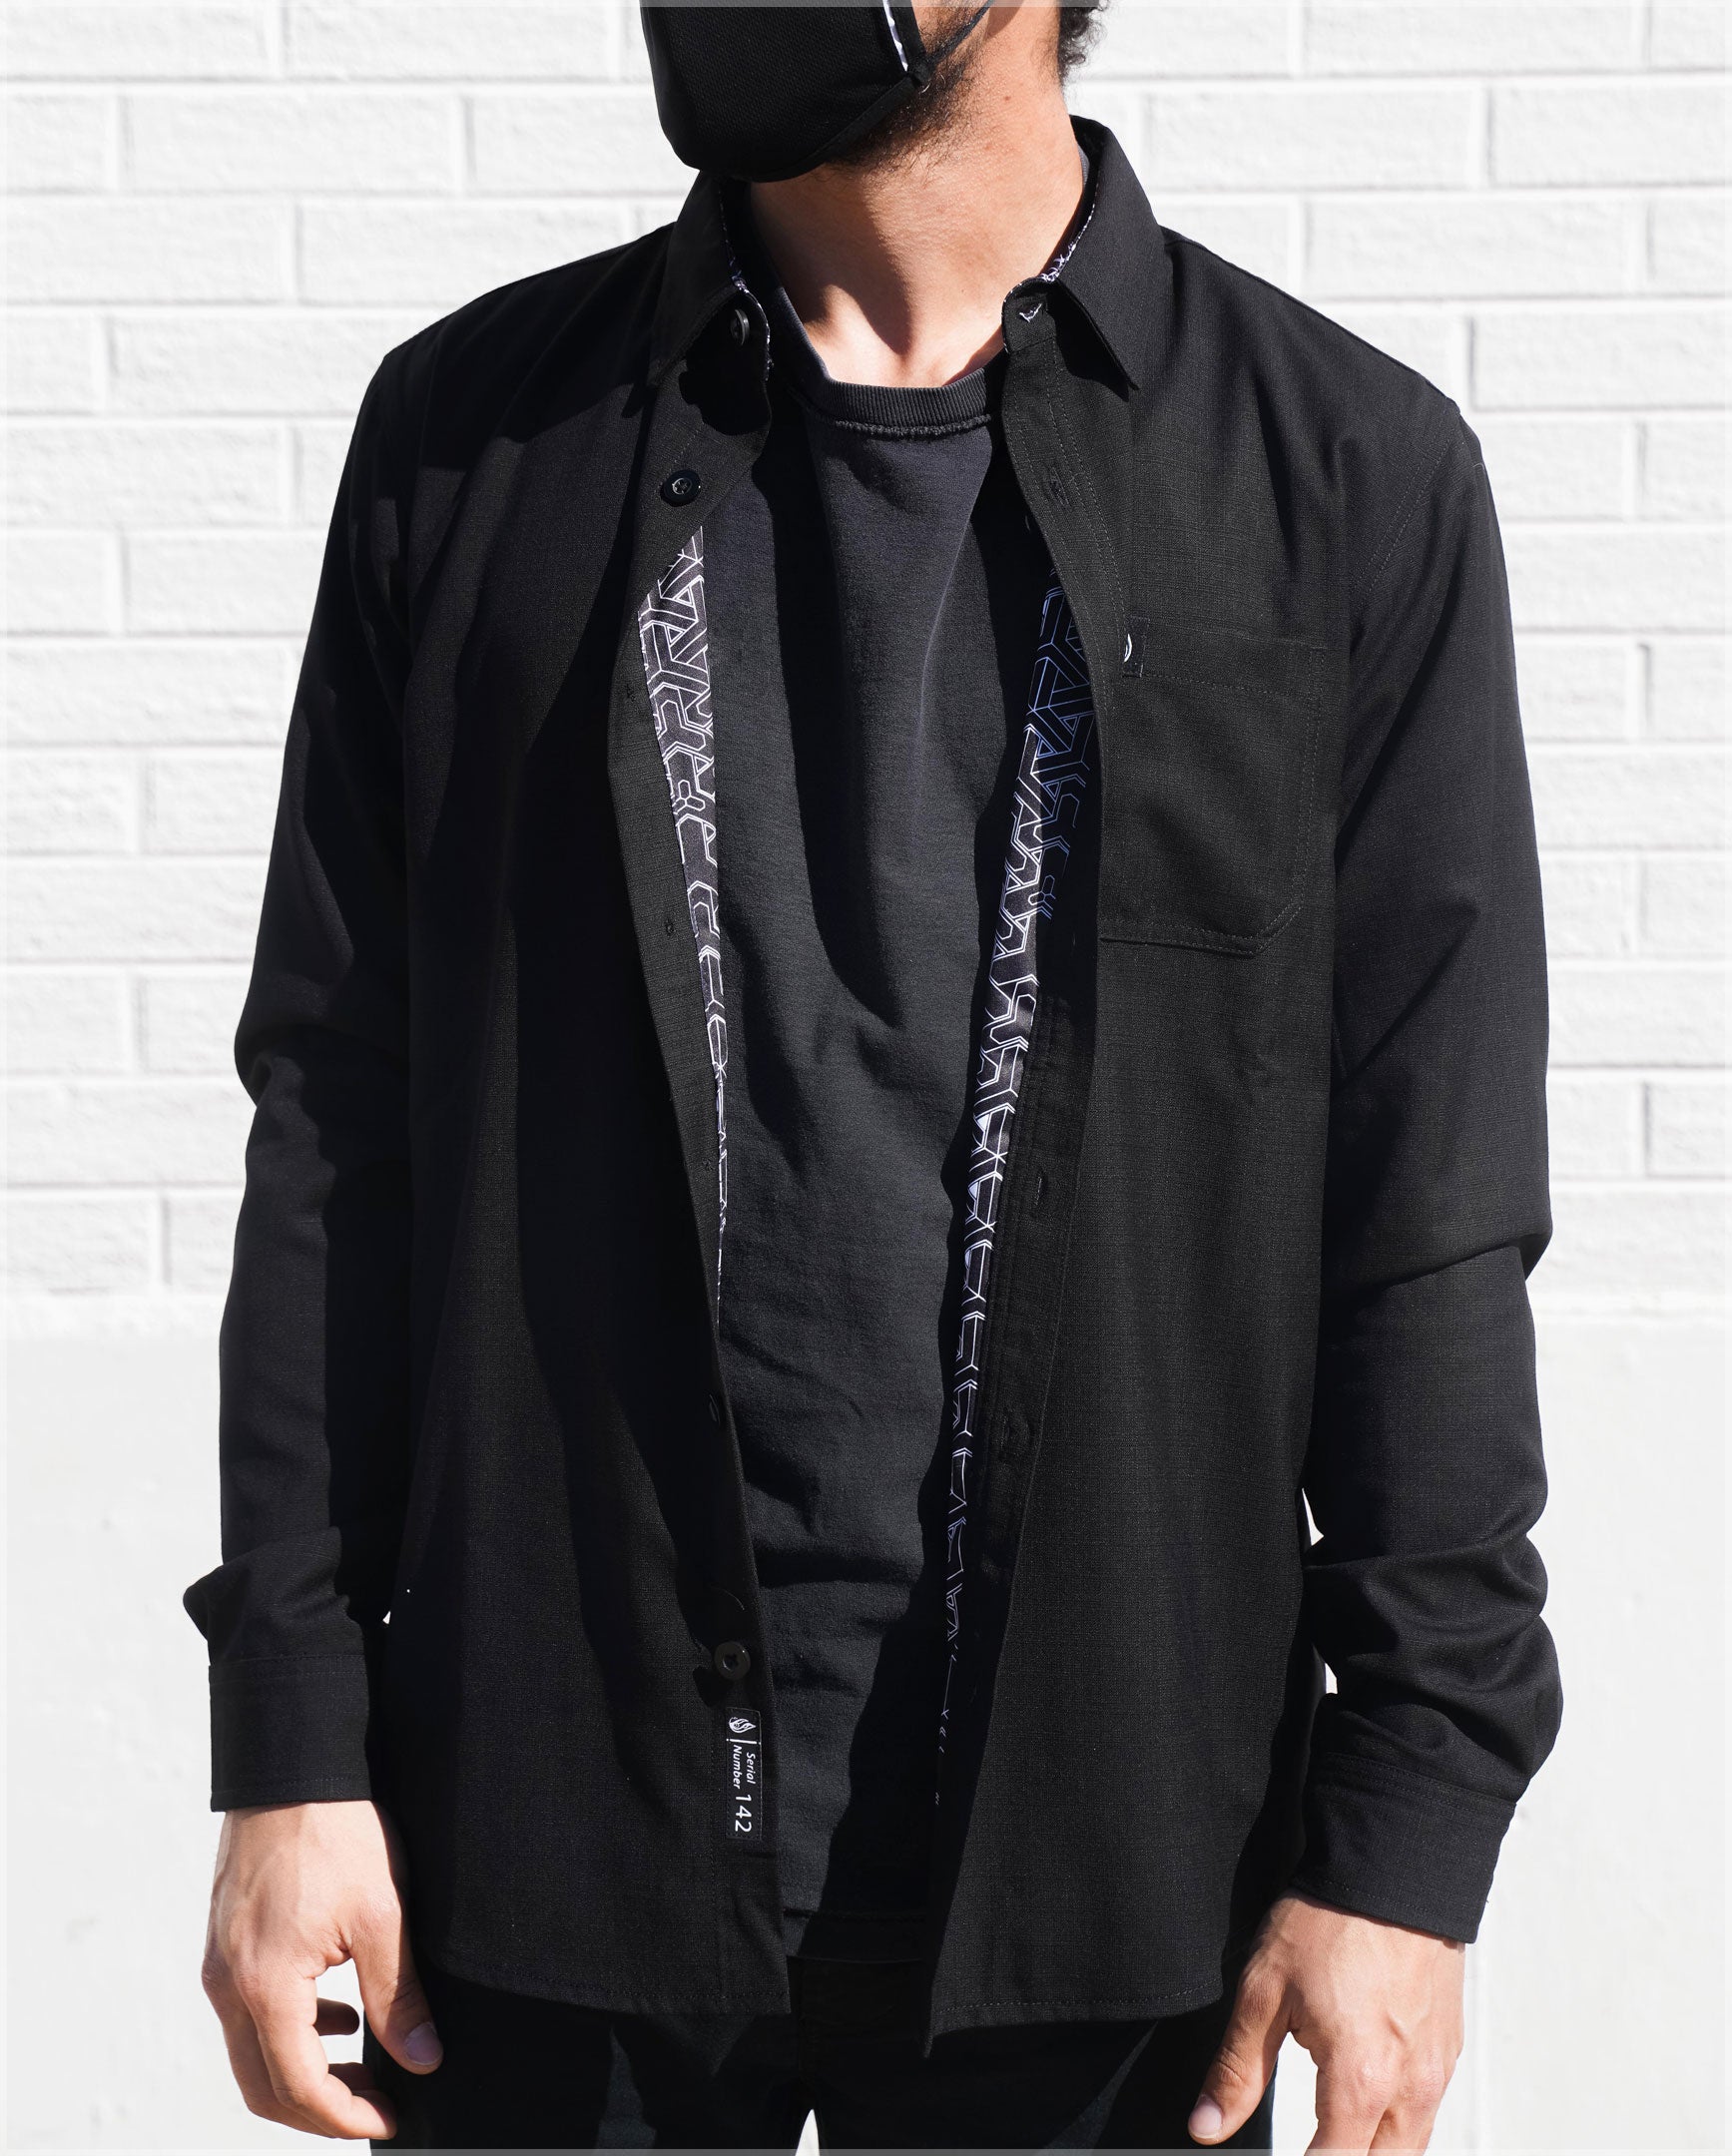 Tesselate Black Button Down Shirt by Kimi Takemura